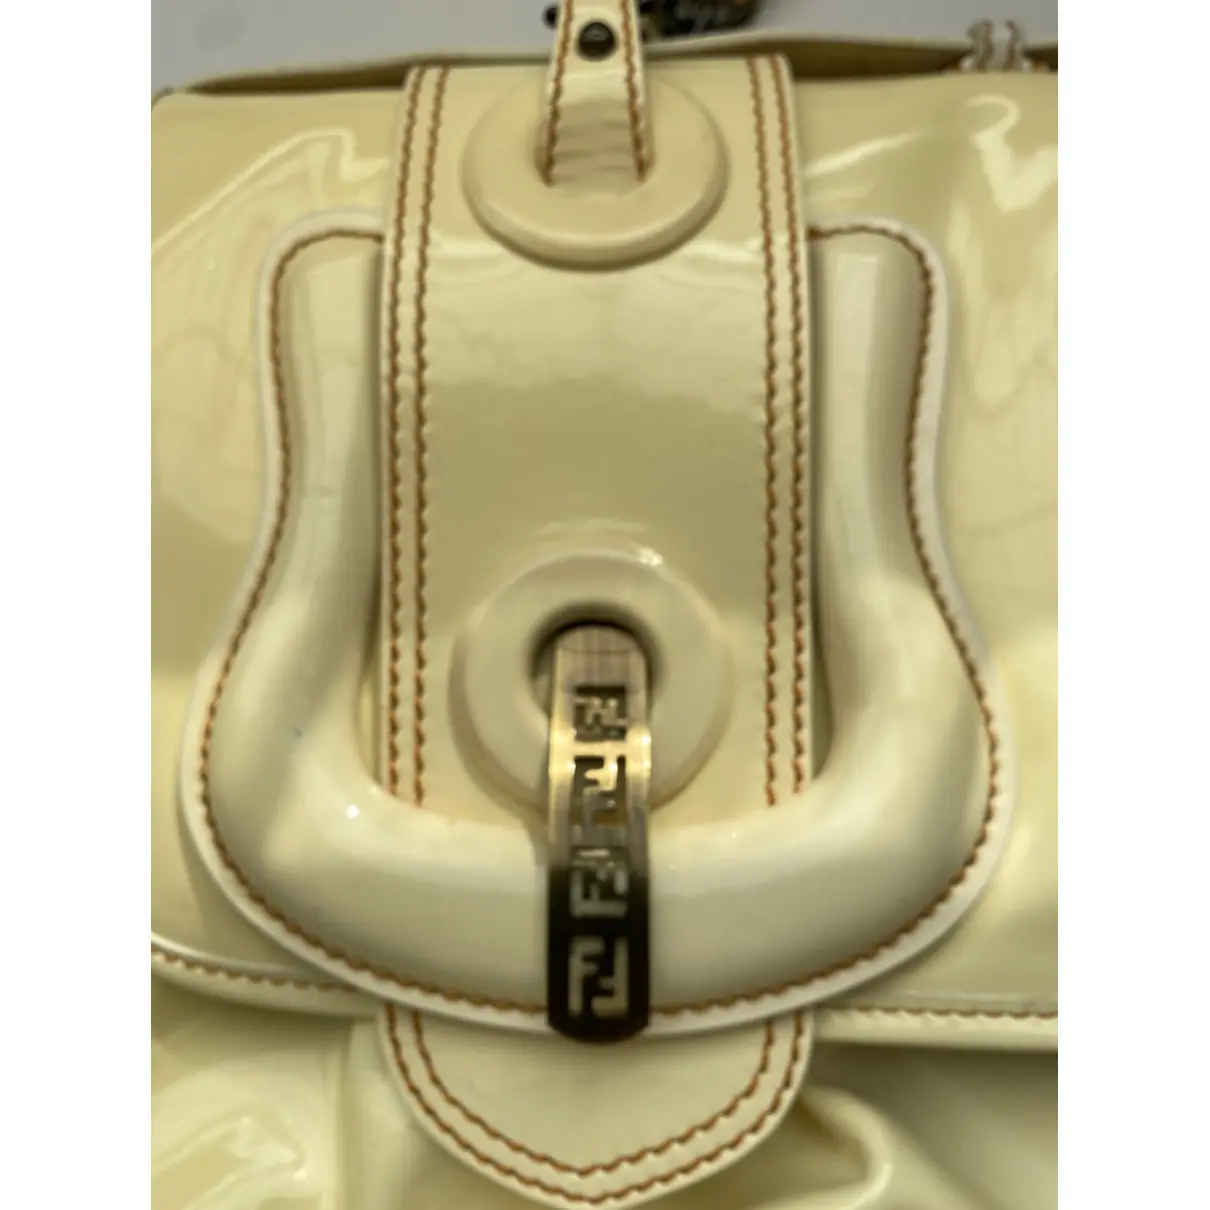 Bag patent leather handbag Fendi - Vintage